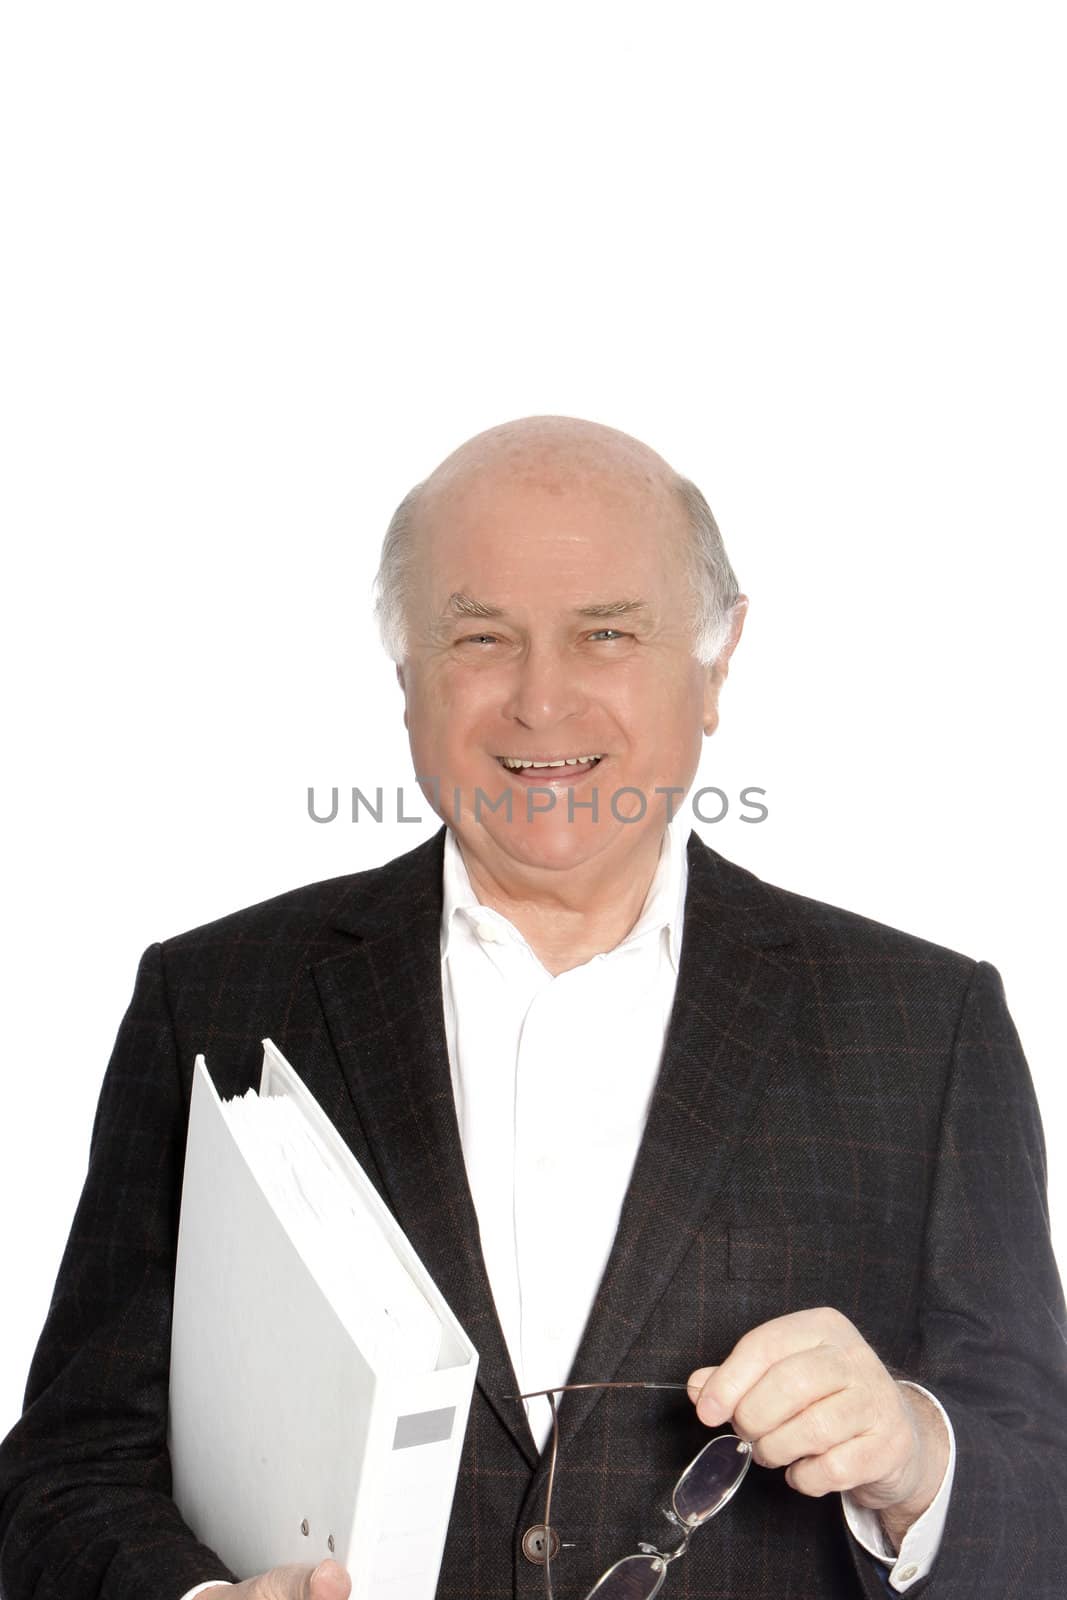 Smiling happy senior man holding a large white folder under his arm, isolated on white